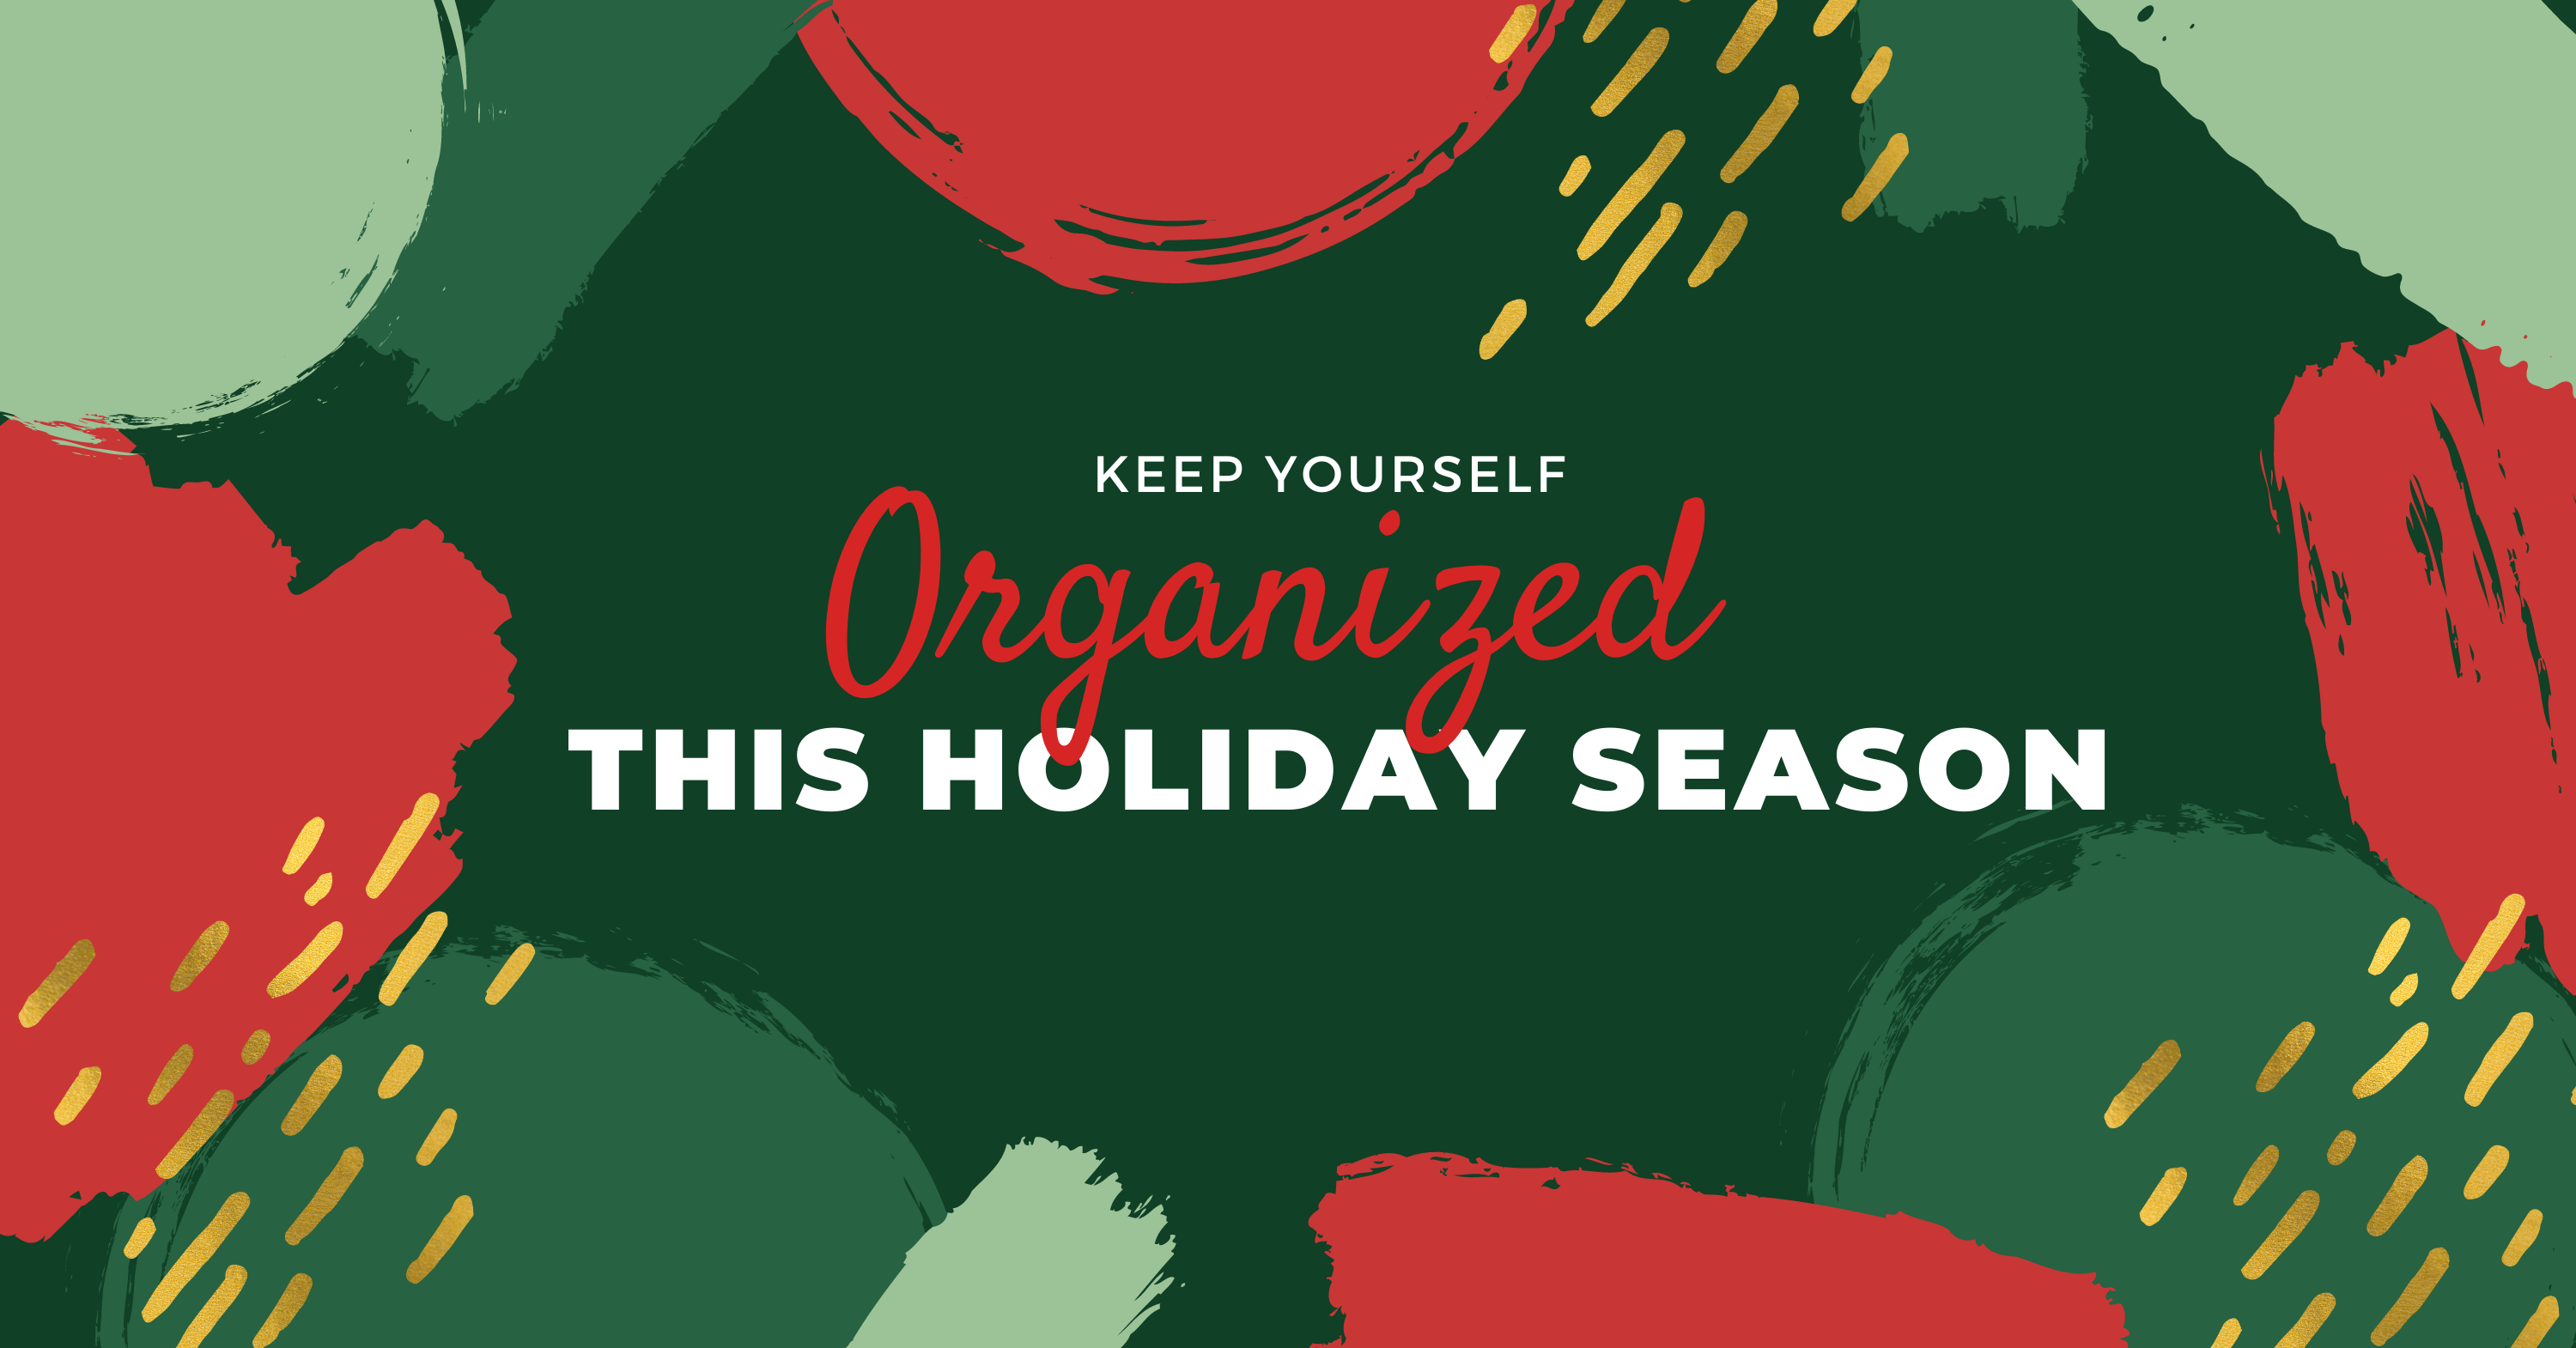 Keep Yourself Organized This Holiday Season